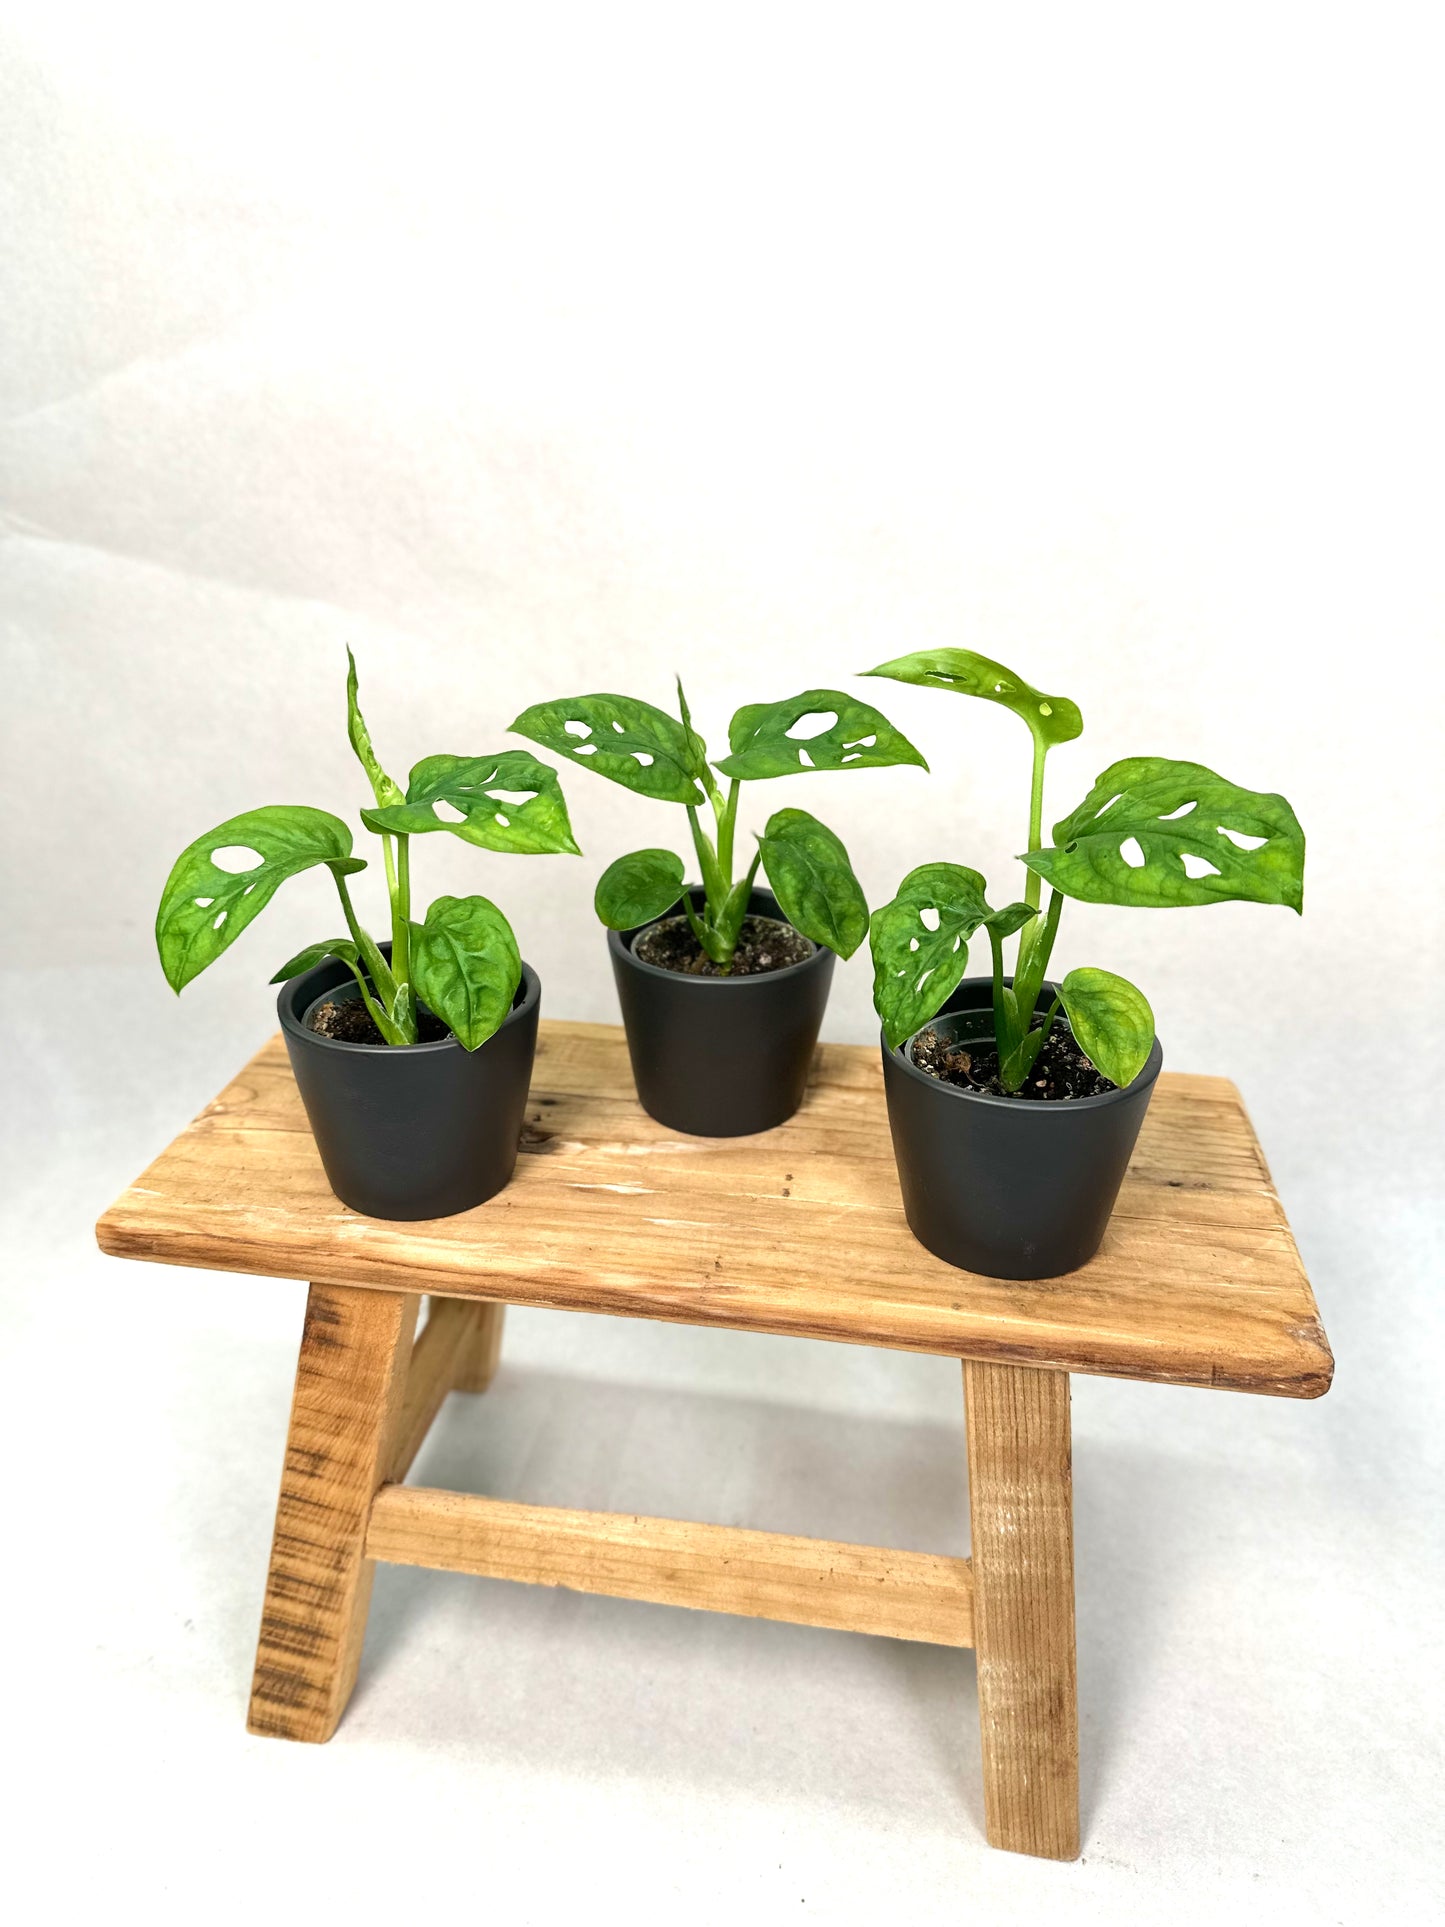 Monstera Adansonii - Baby plant